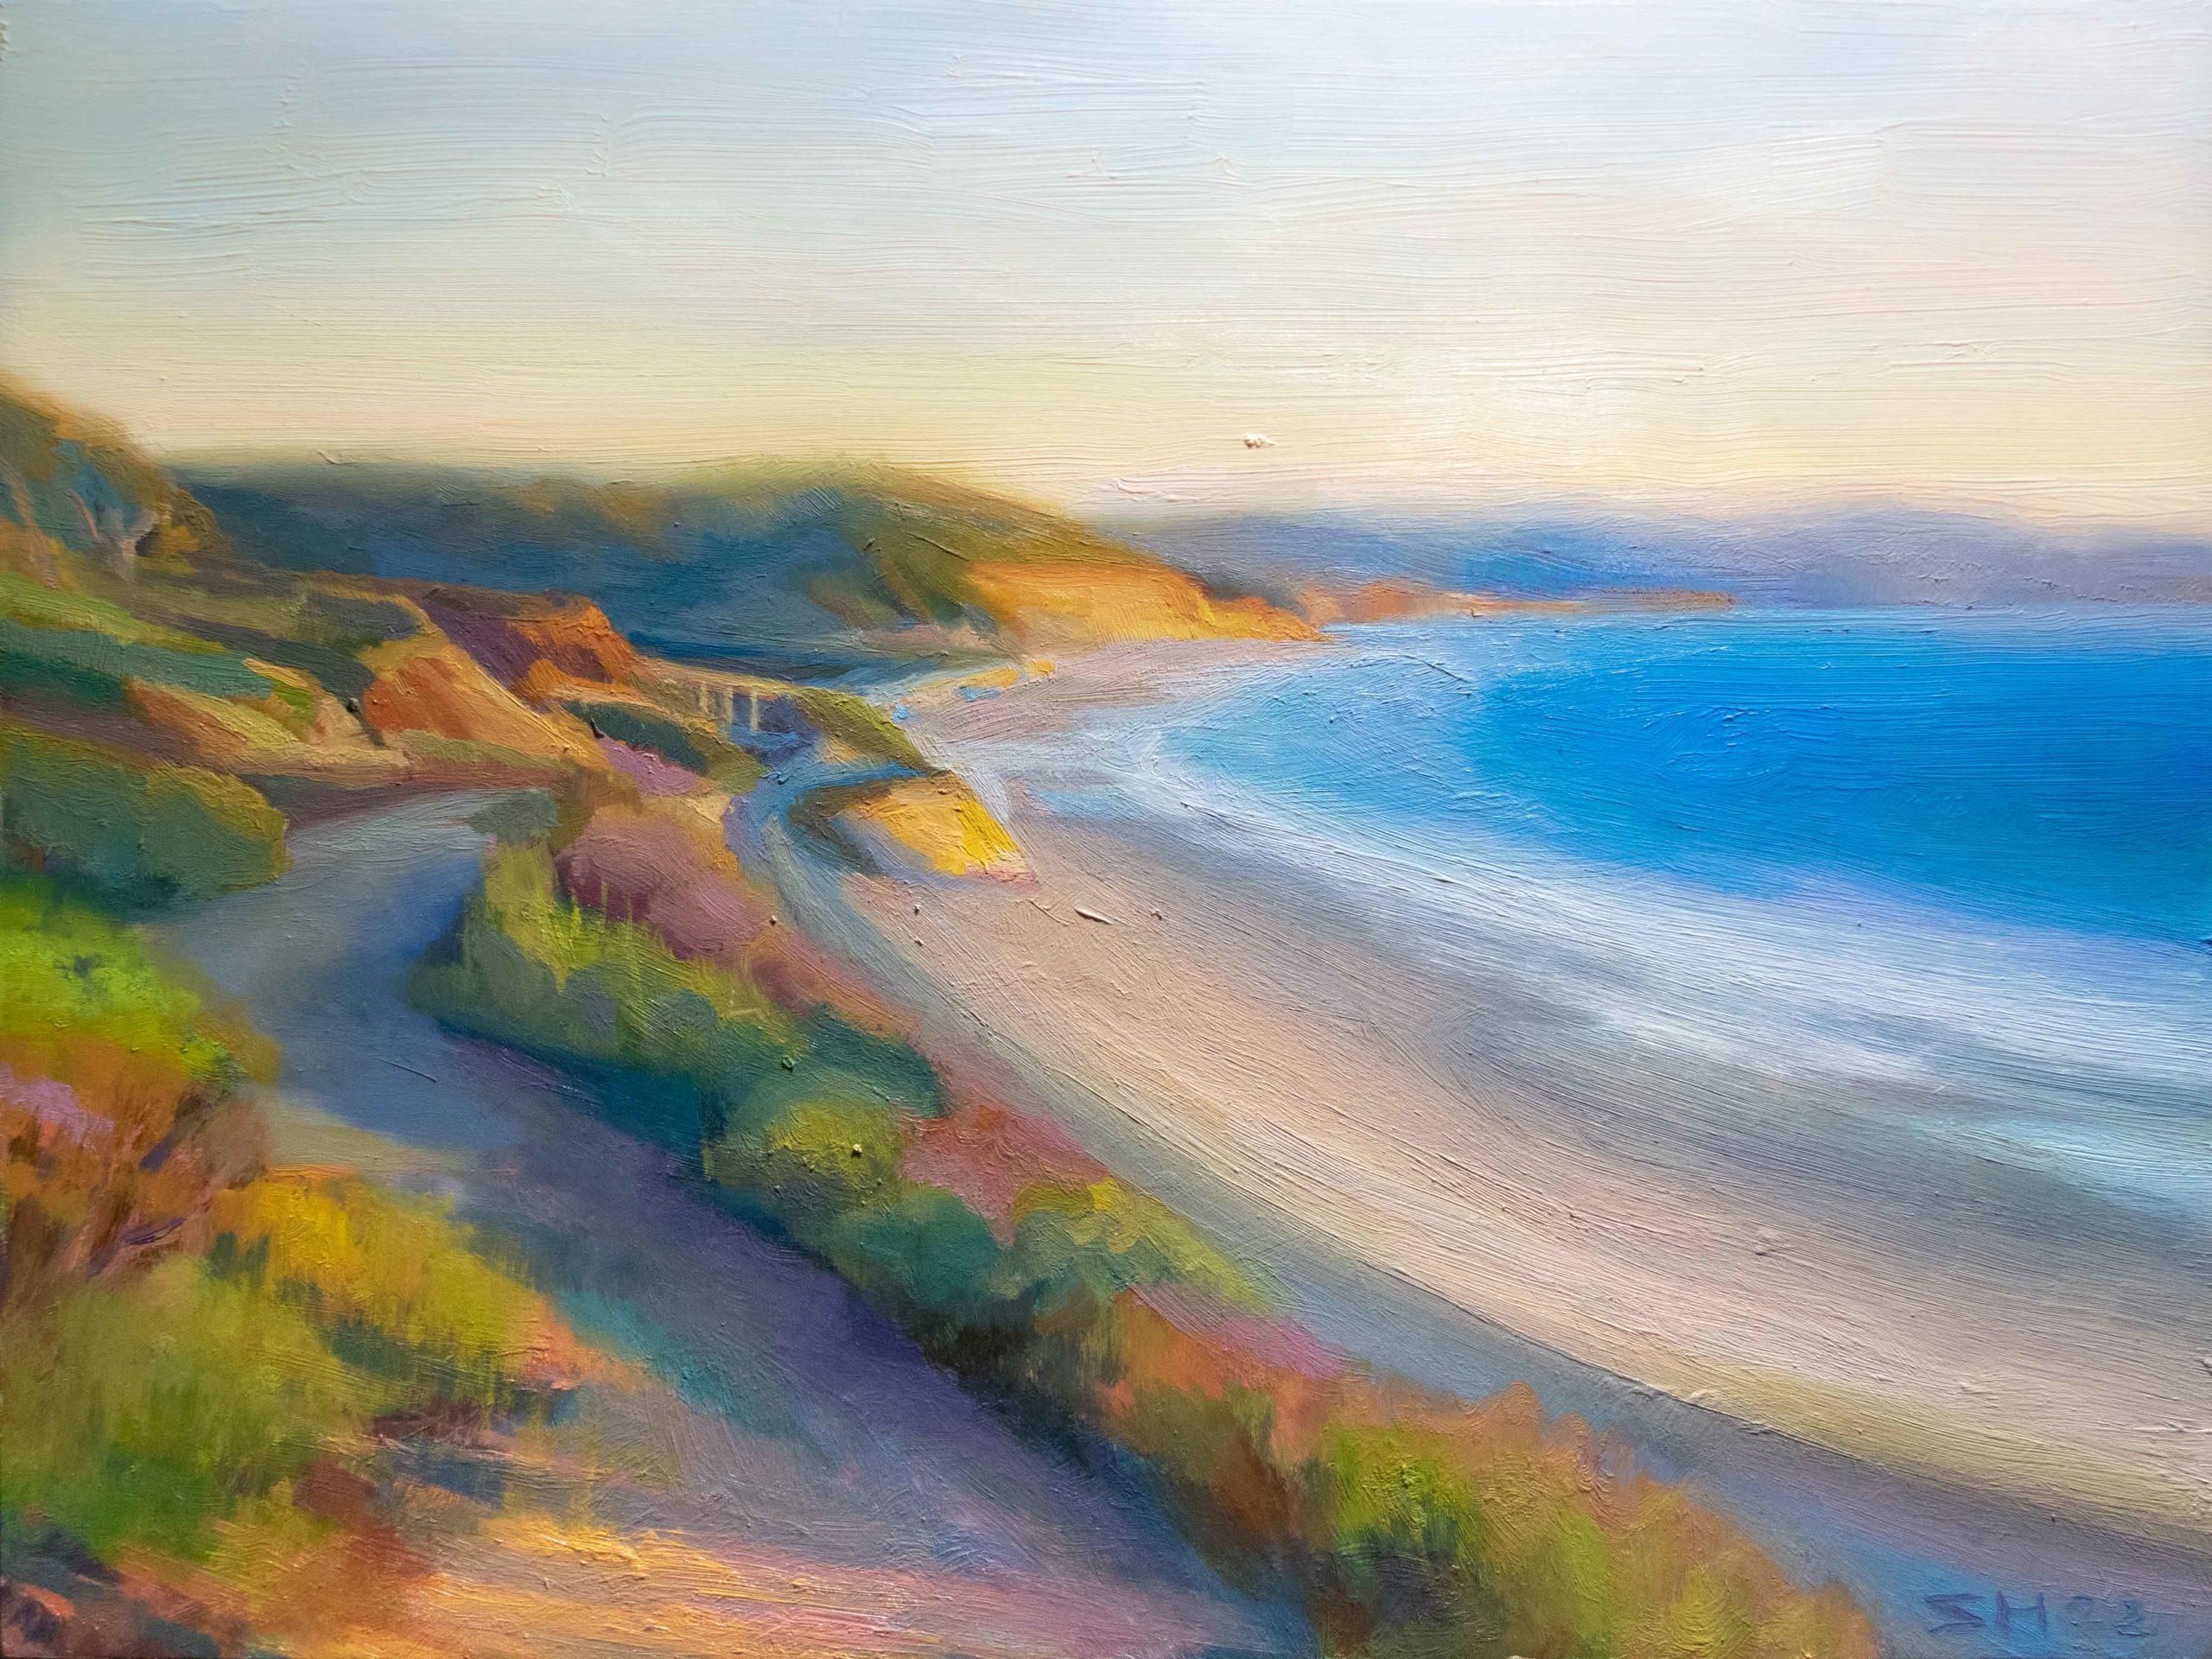 Sean Hnedak Landscape Painting - An Impressionist Oil on Panel Seascape Painting, "Last Light at Torrey"